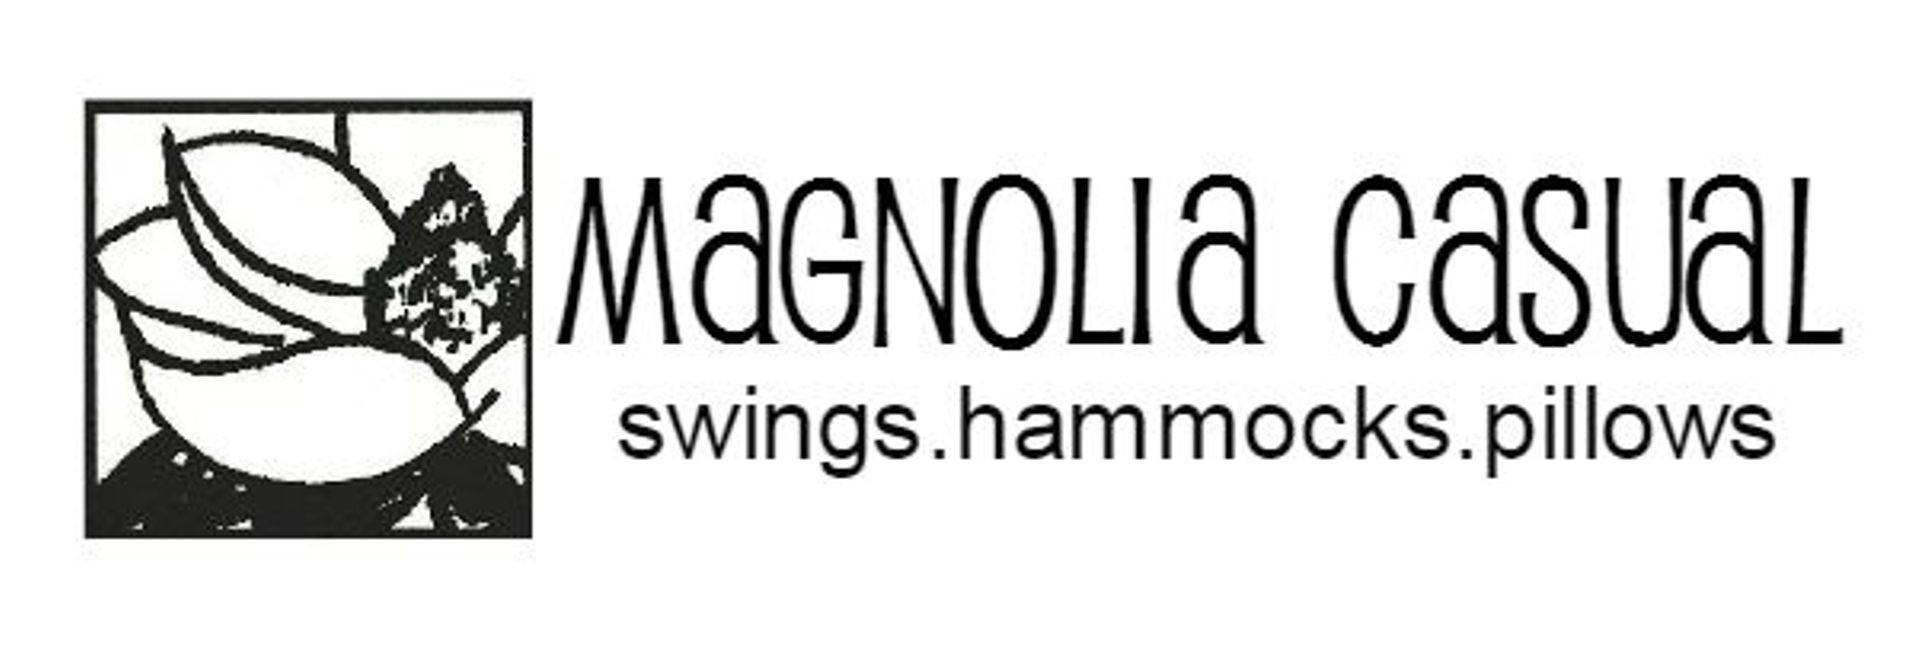 Magnolia Casual logo